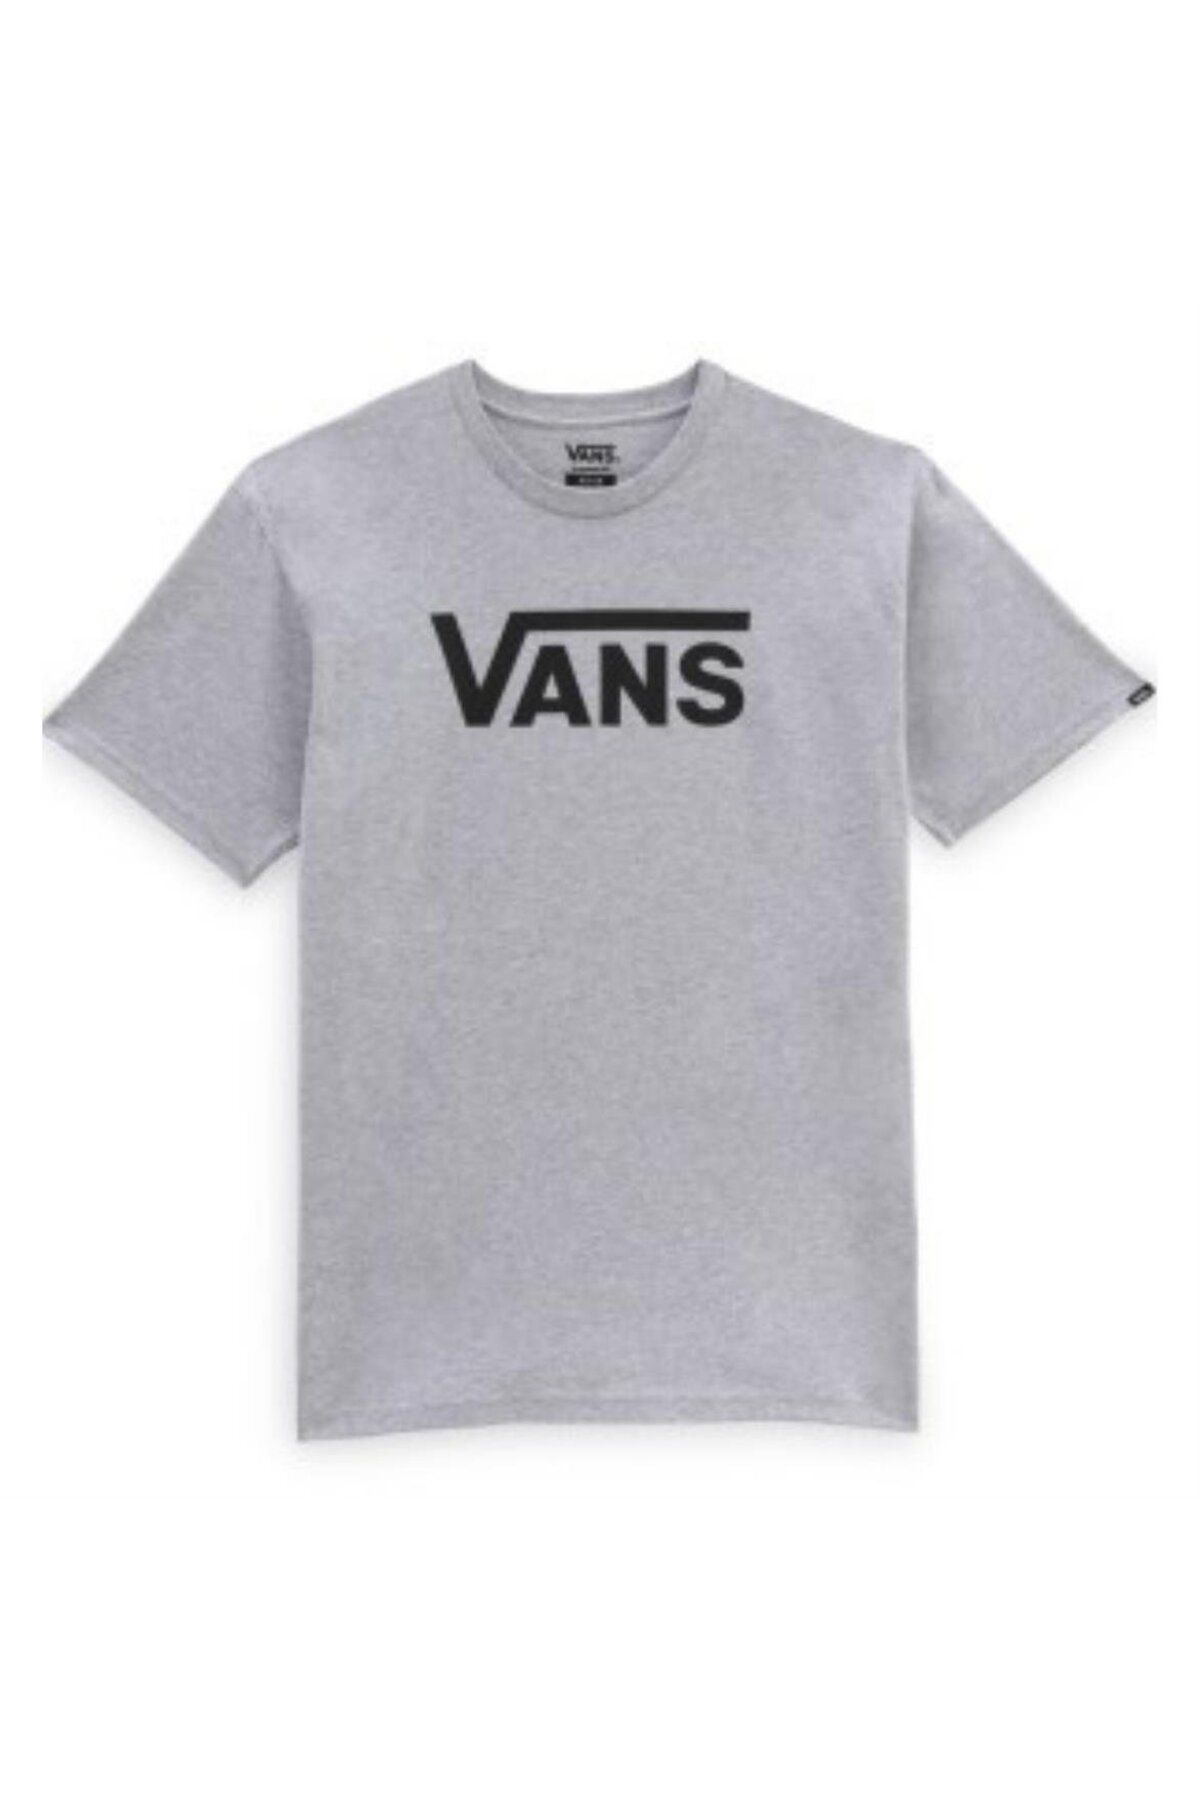 Vans Classic Gri T-shirt